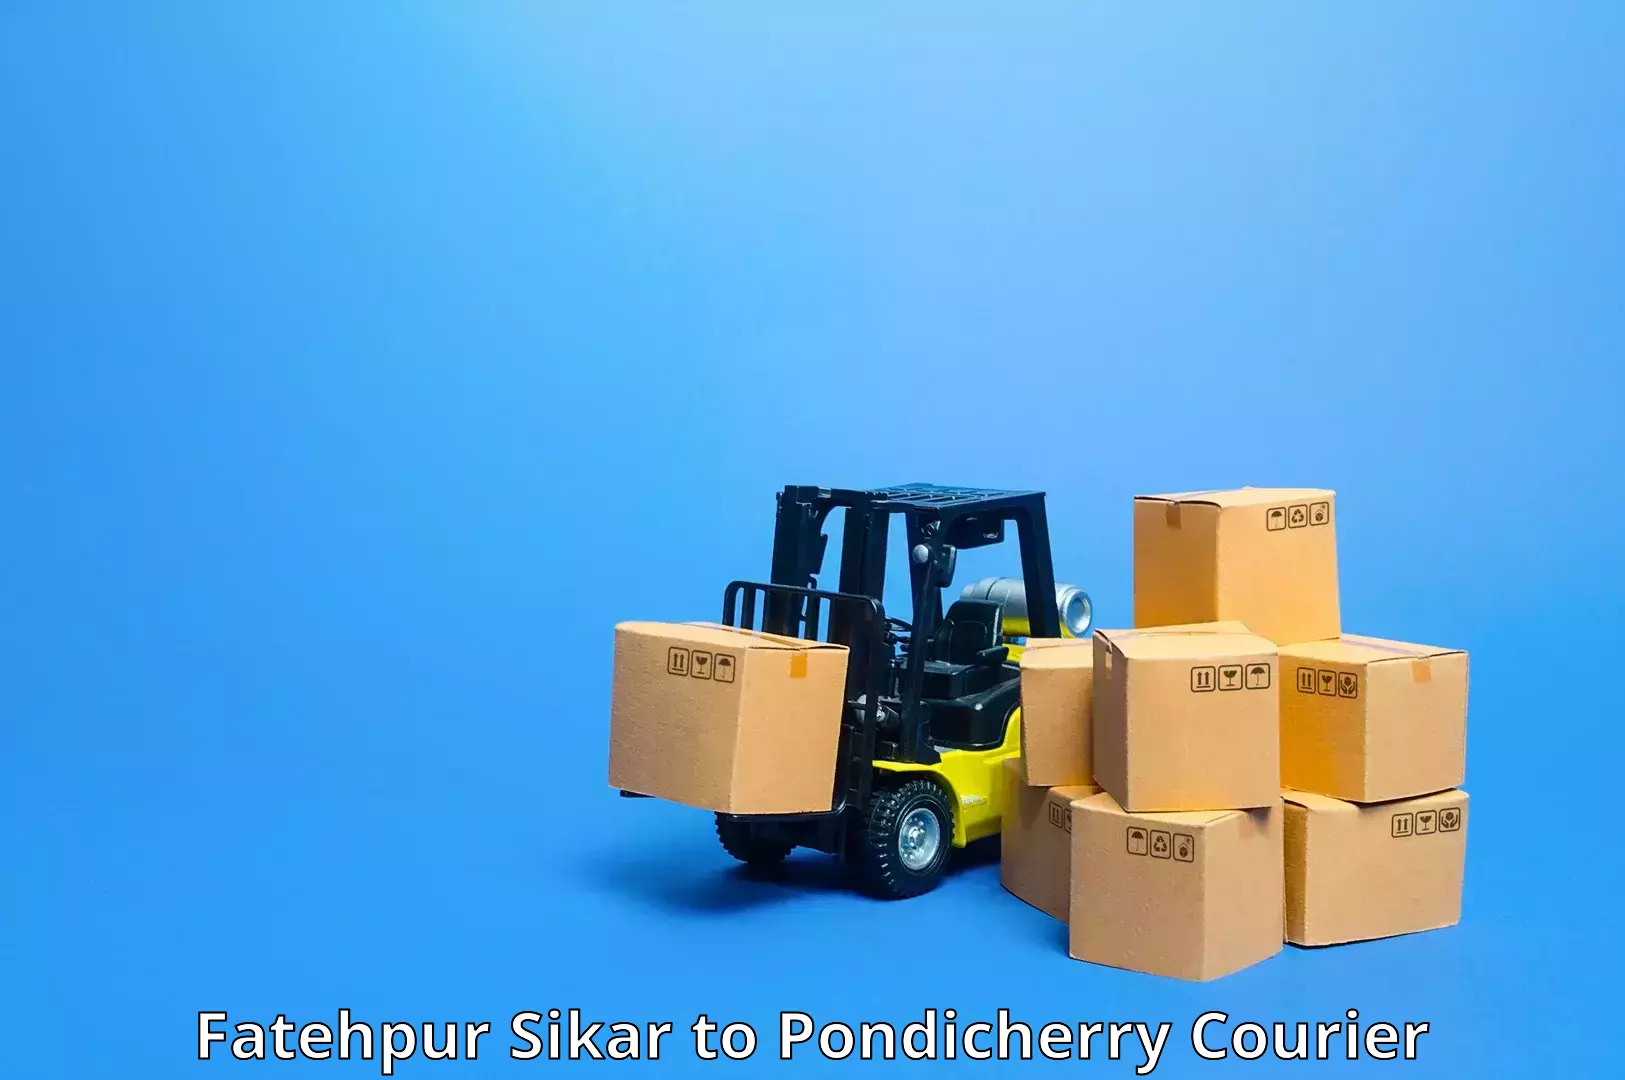 Doorstep delivery service Fatehpur Sikar to Pondicherry